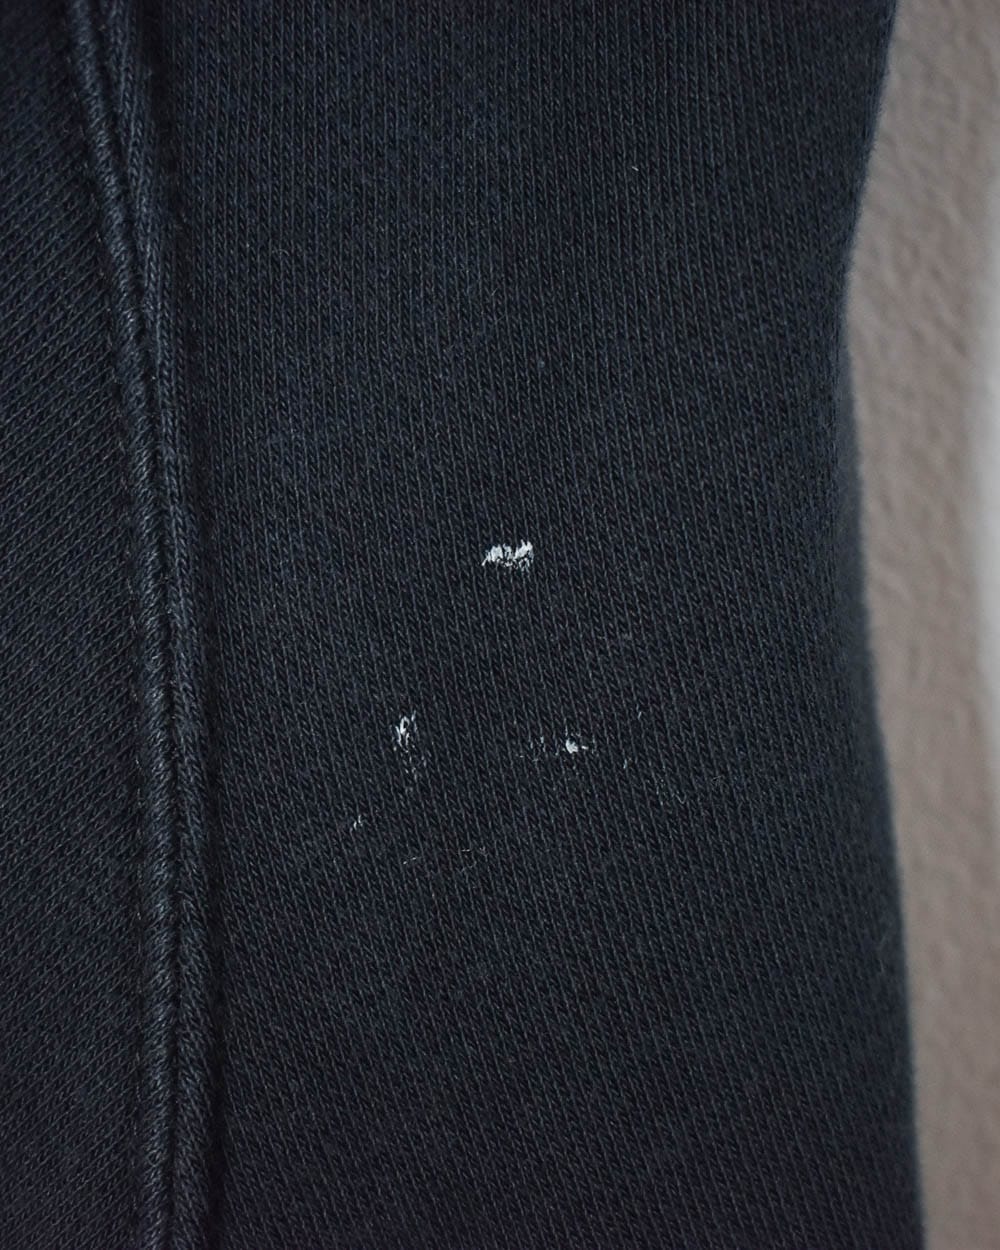 Black Nike 1/4 Zip Sweatshirt - Medium